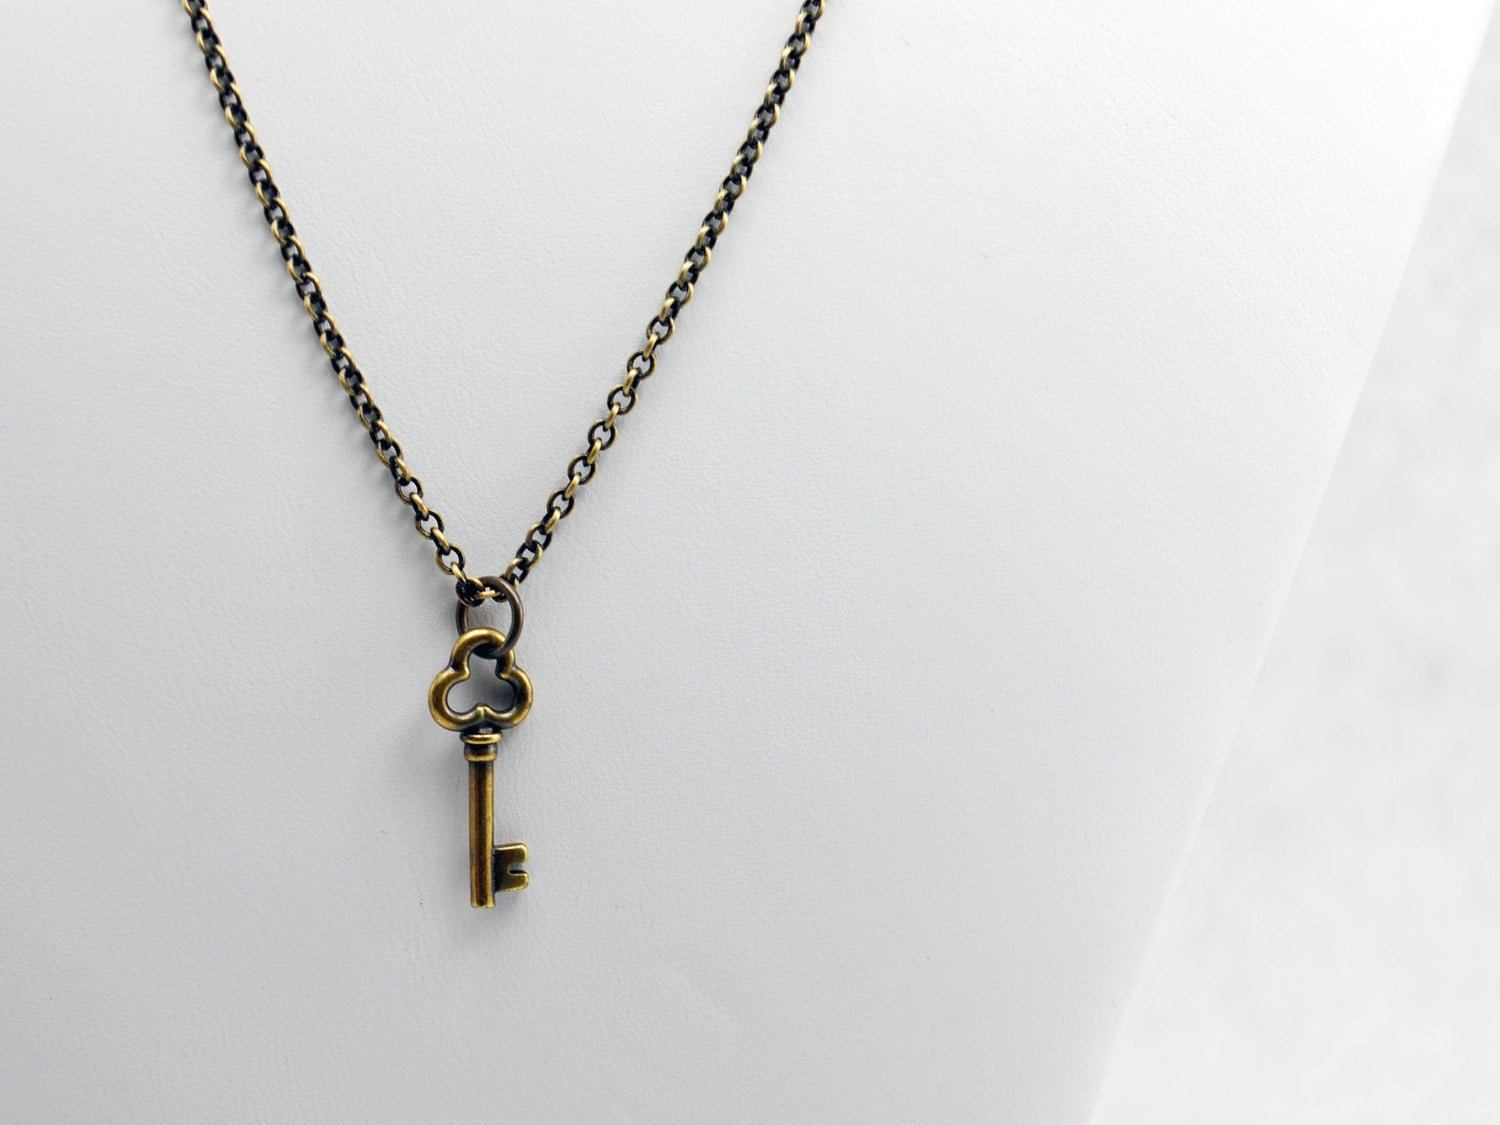 Antique Brass Clover Key Charm Necklace - LuvCherie Jewelry